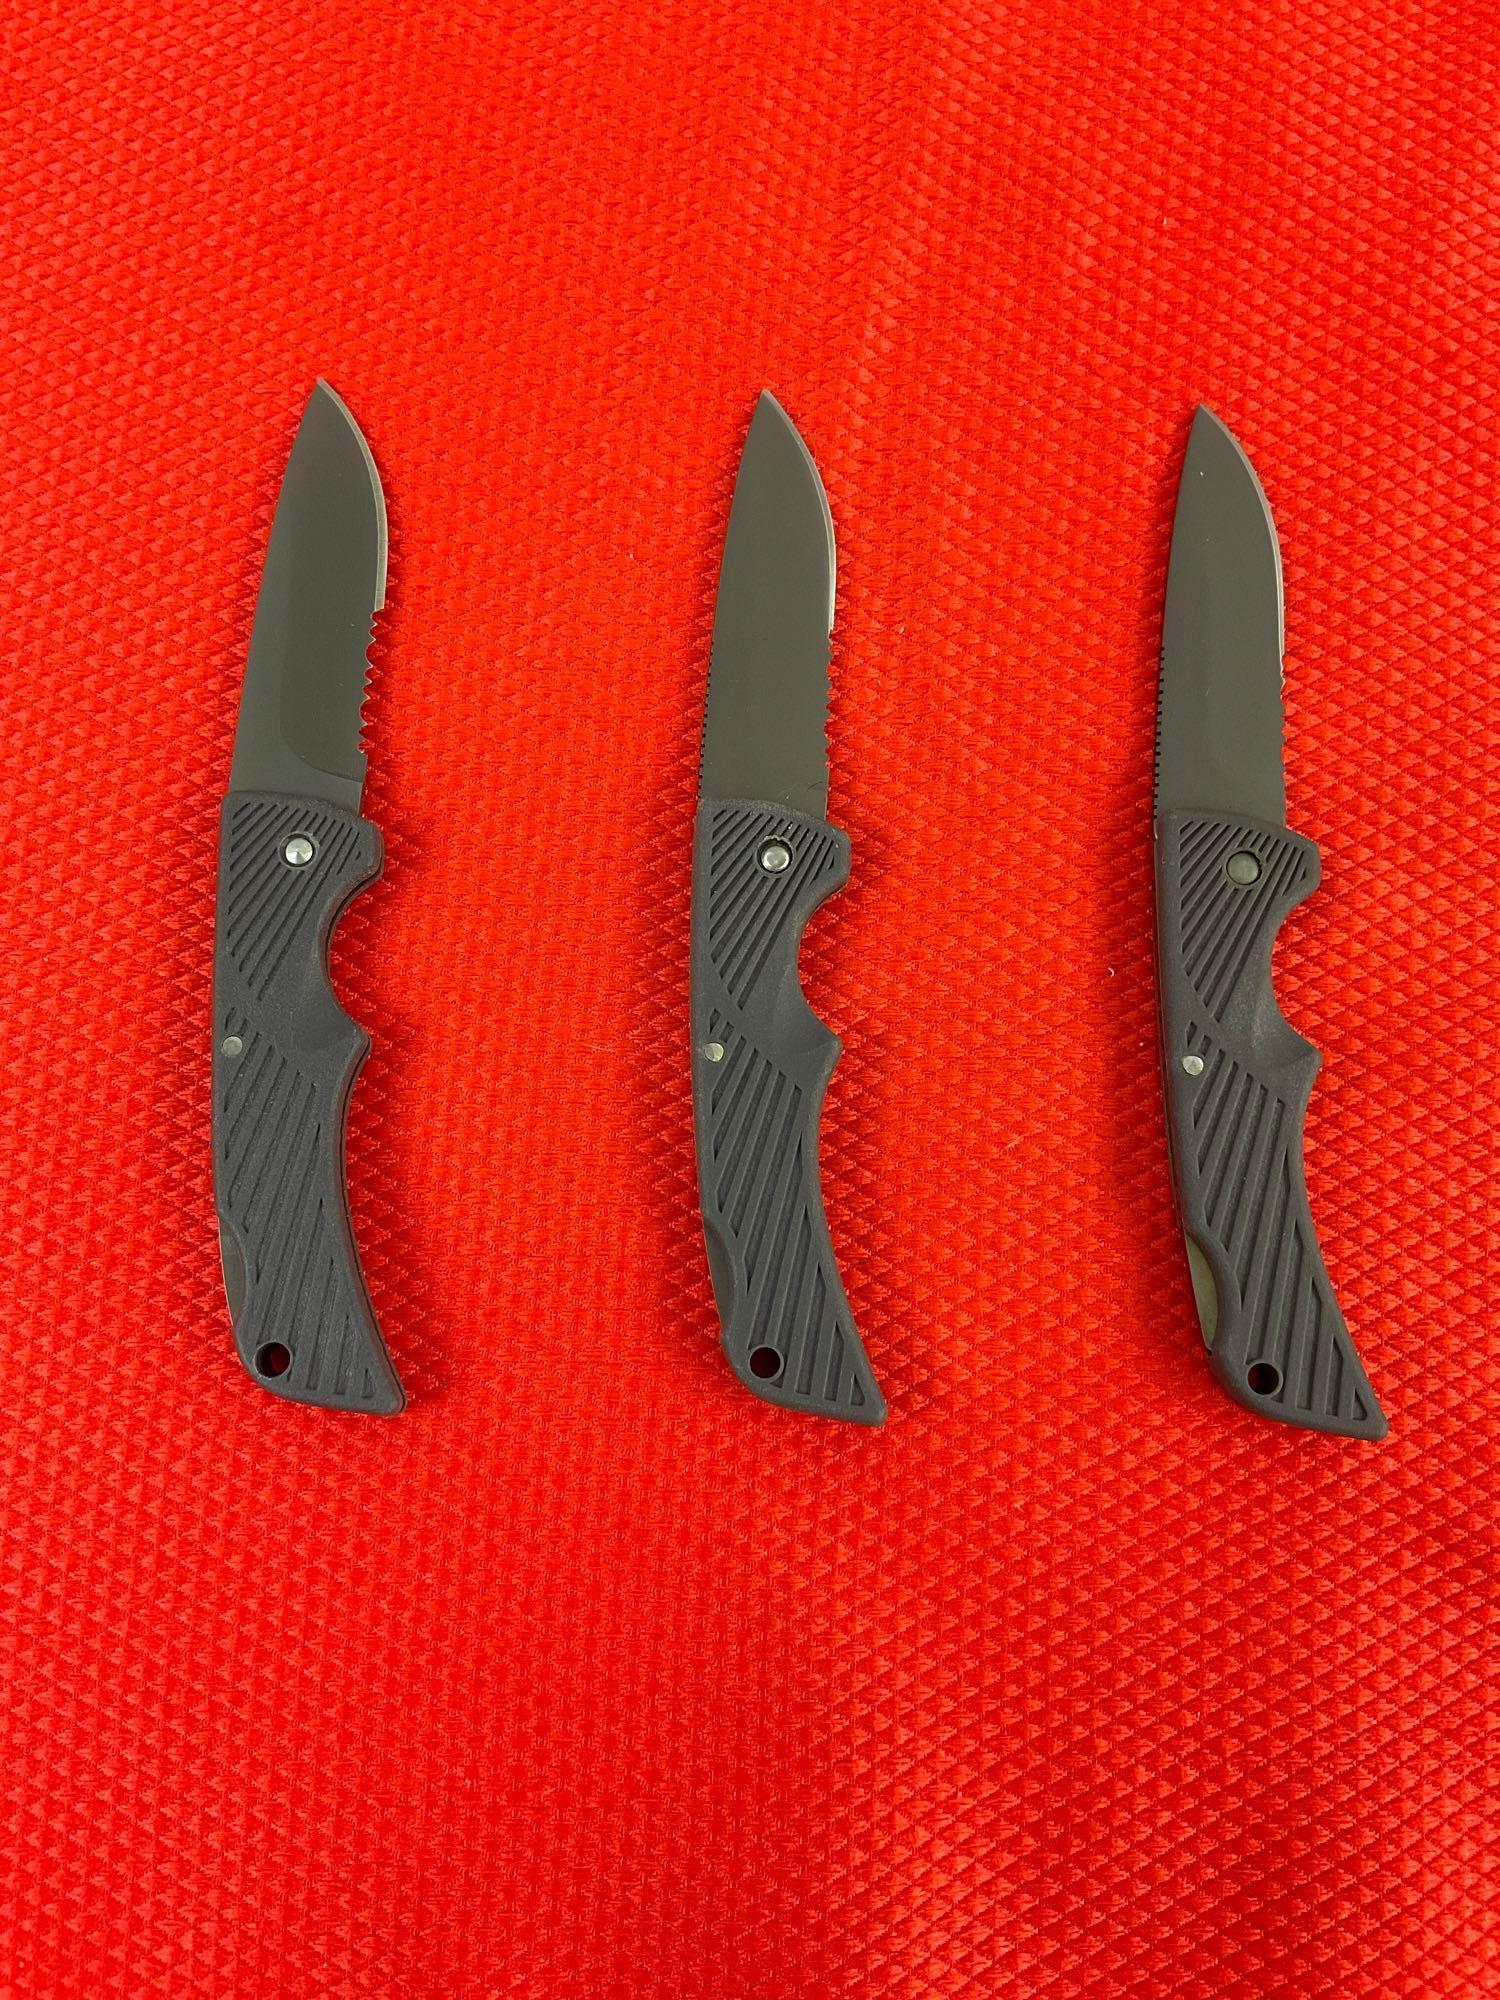 3 pcs Gerber Bear Grylls Compact Scout Folding Knives Model No. 30-000837. NIB. See pics.